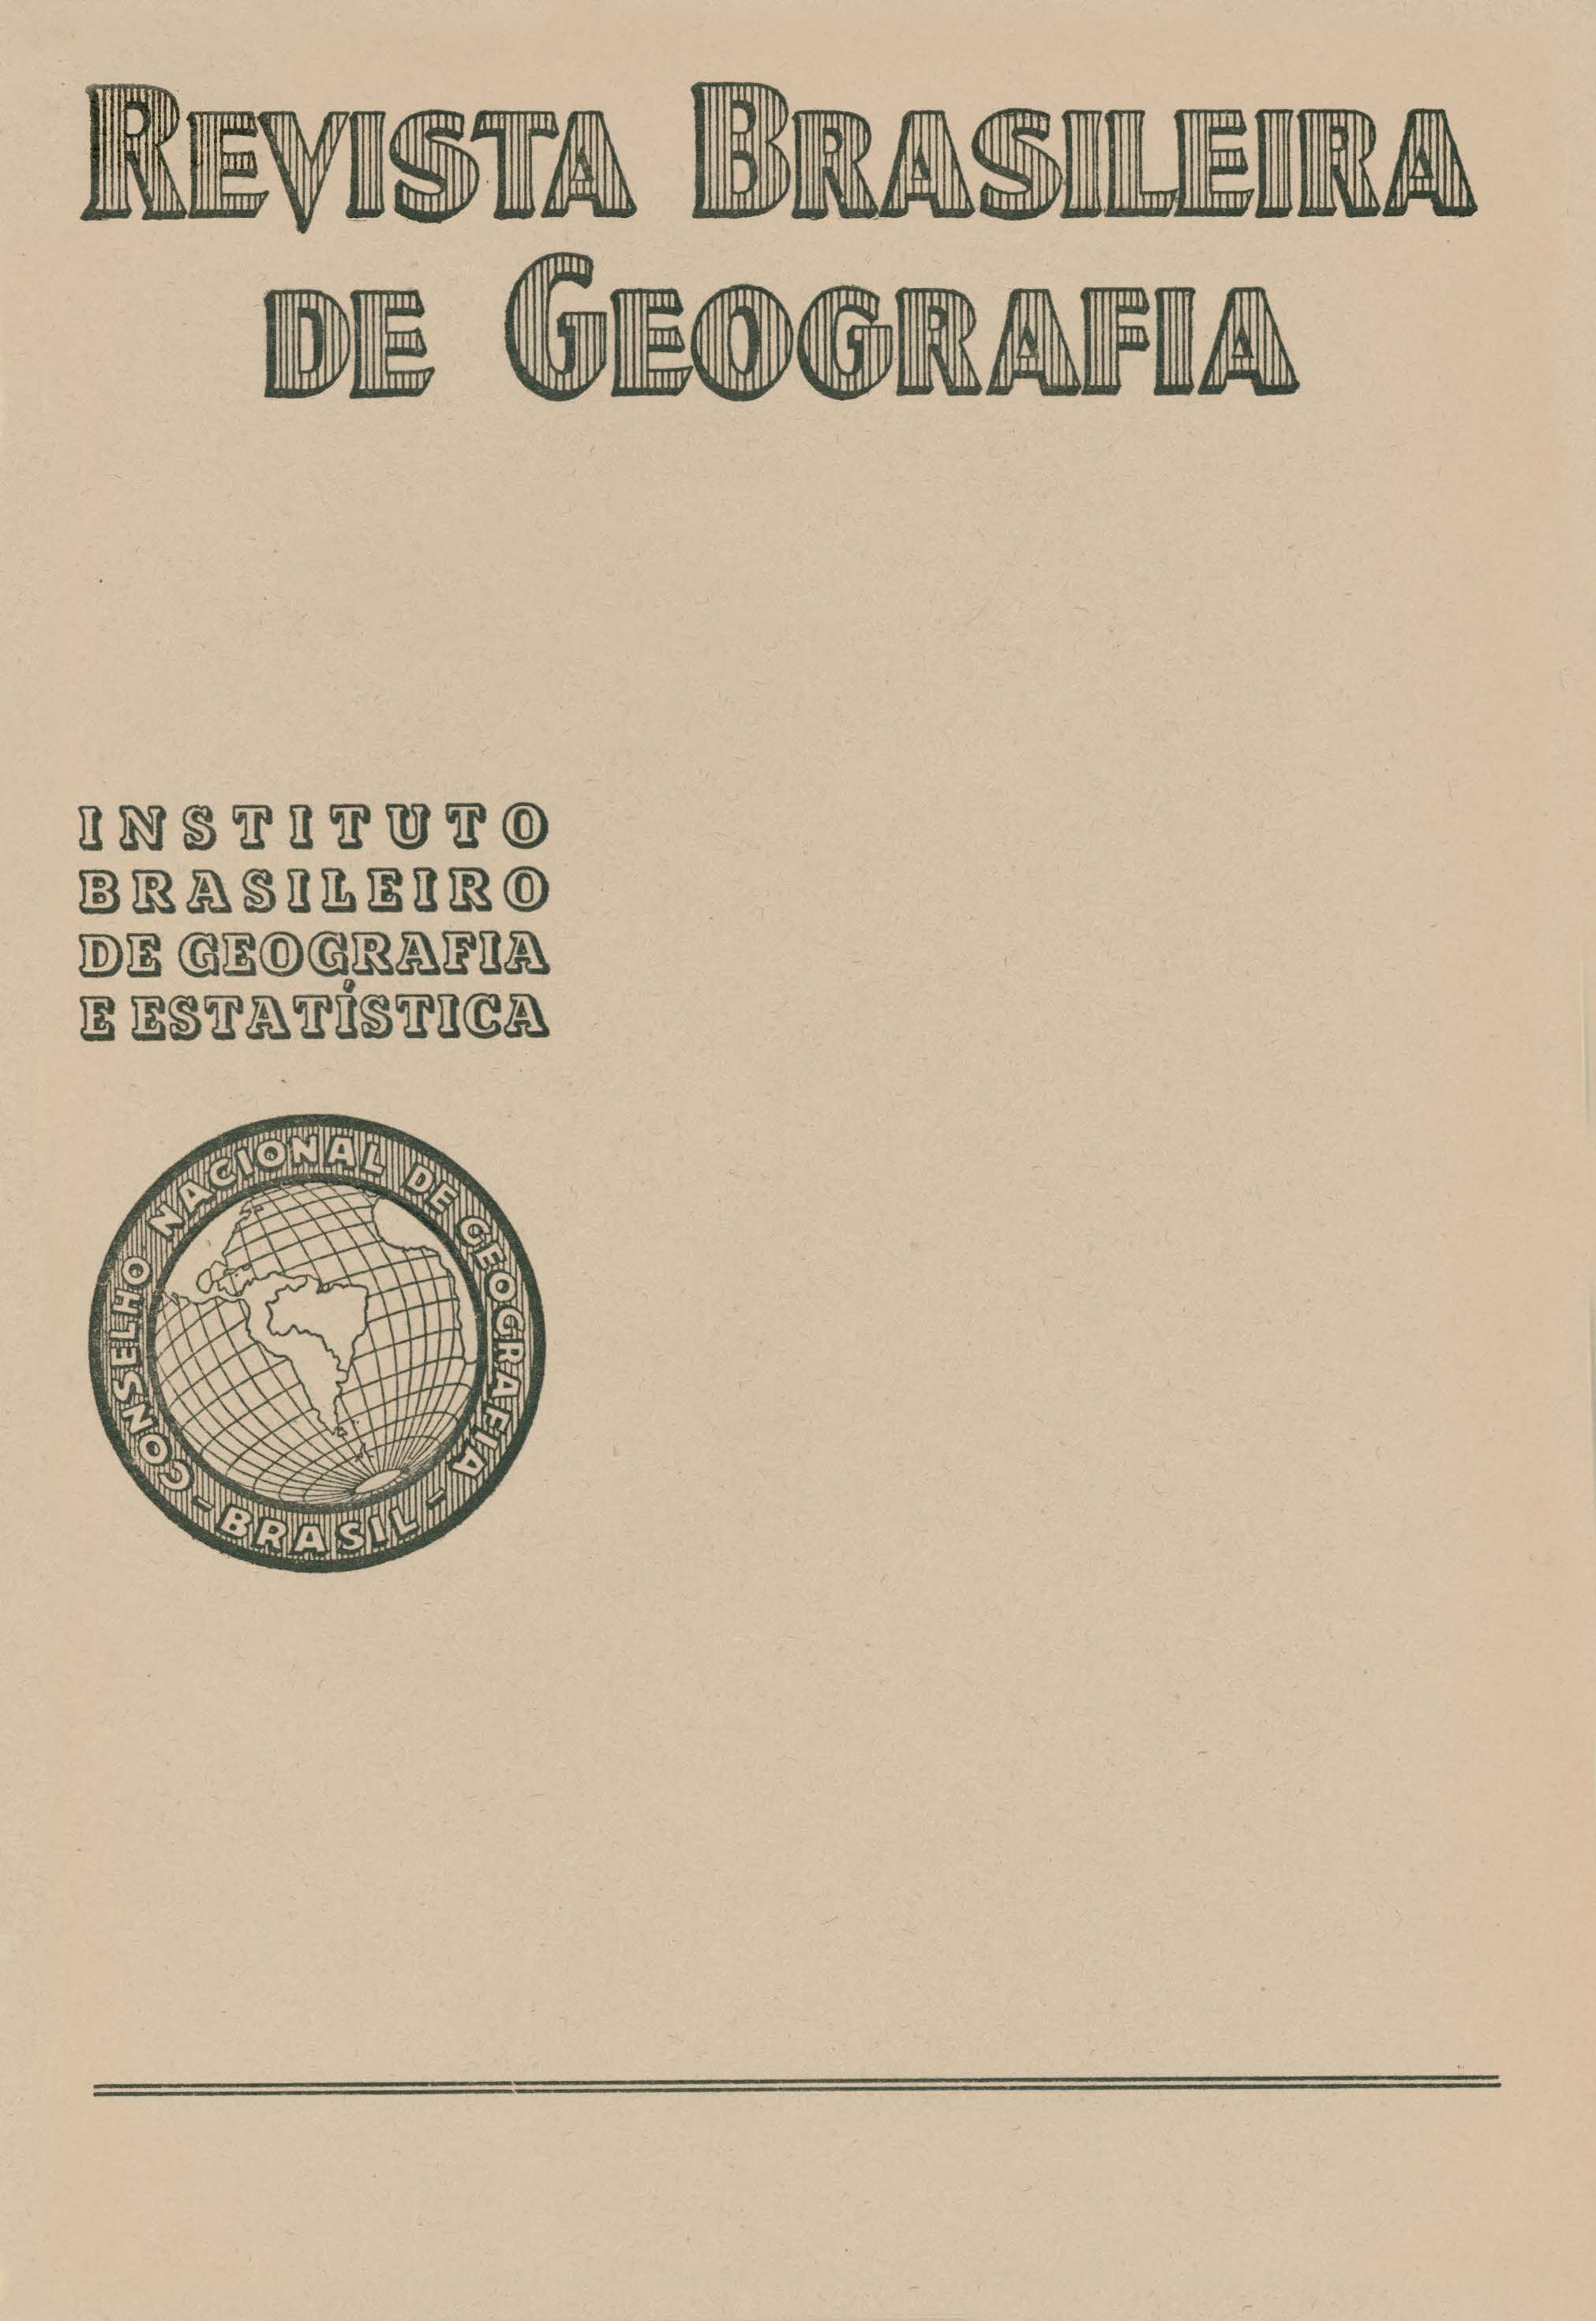 					Visualizar v. 28 n. 4 (1966)
				